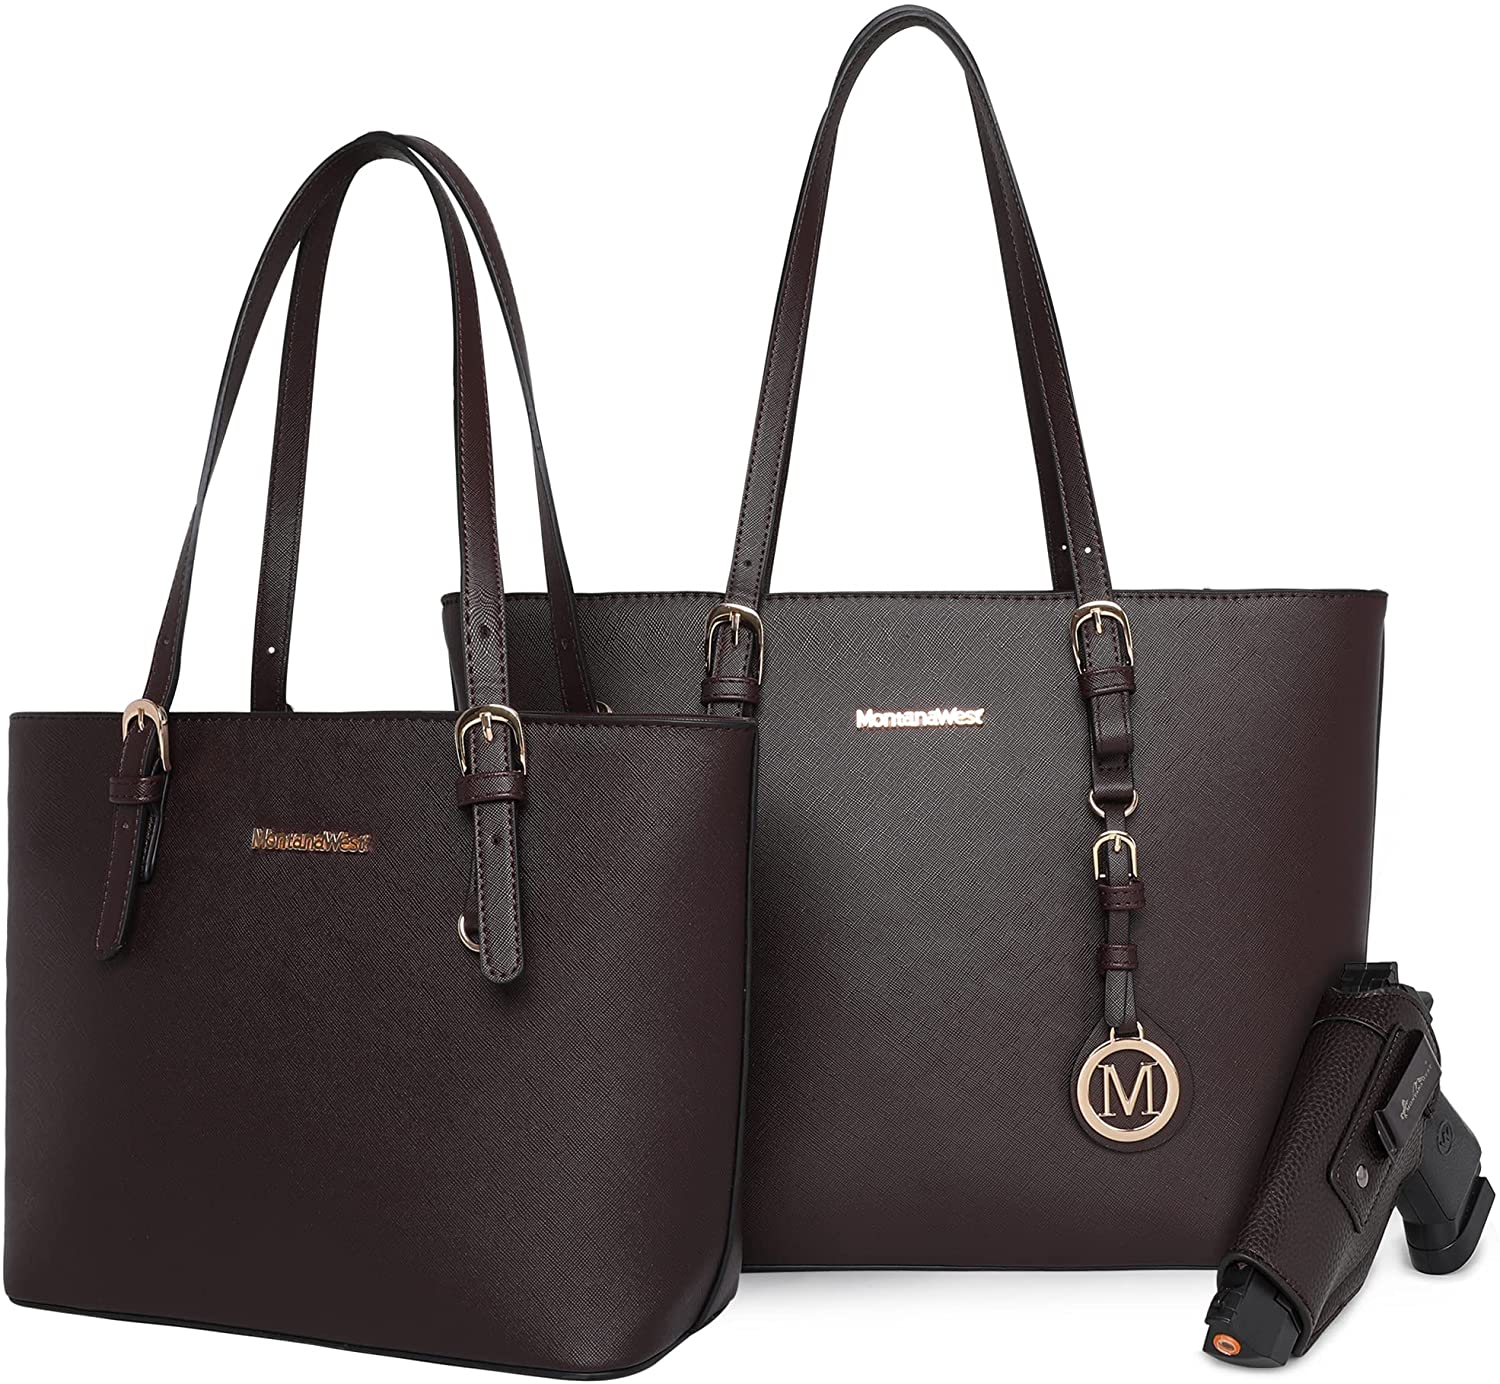 Tote Handbag Set Concealed Carry Purse for Women Large and Medium 2pcs  Fashion S | eBay